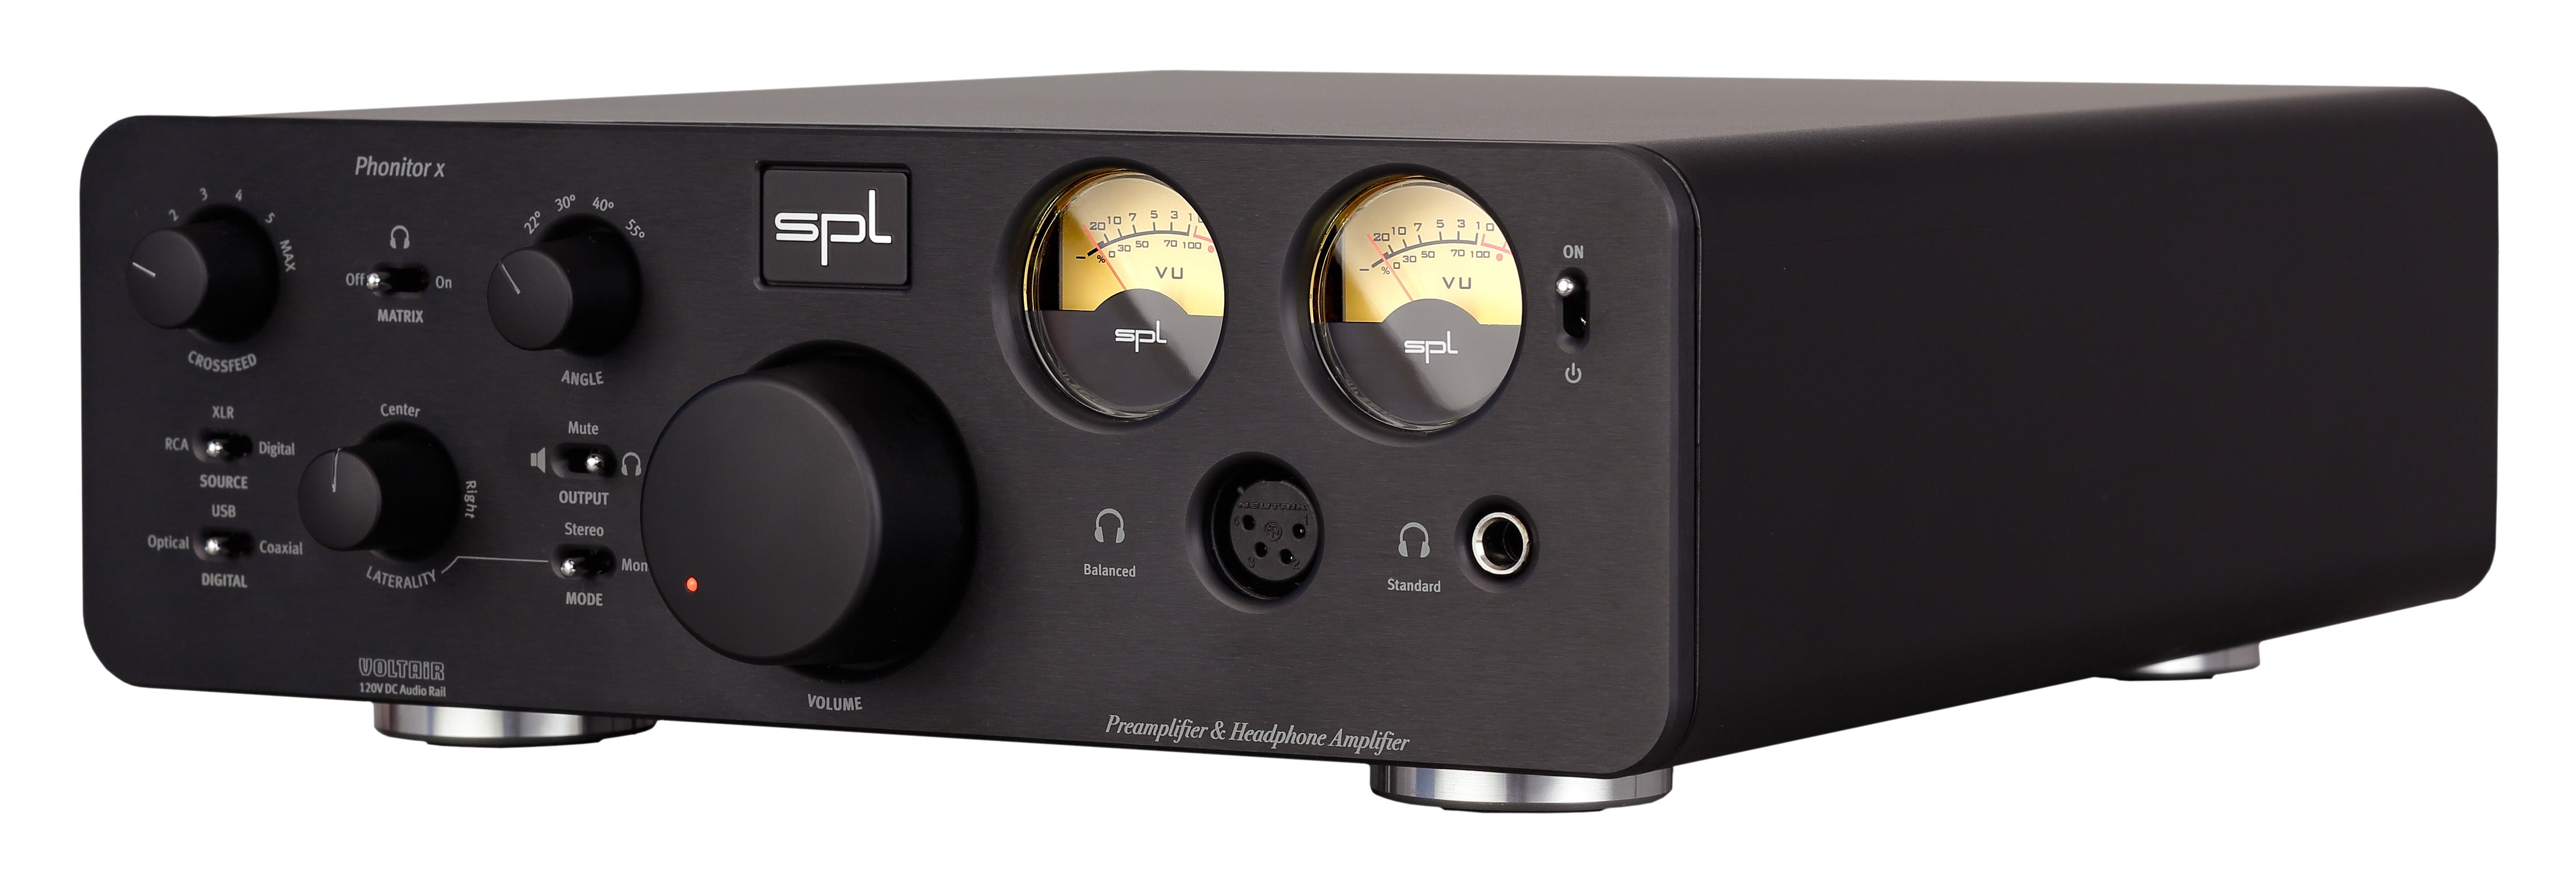 SPL Phonitor X - Headphone Amplifier - Professional Audio Design, Inc